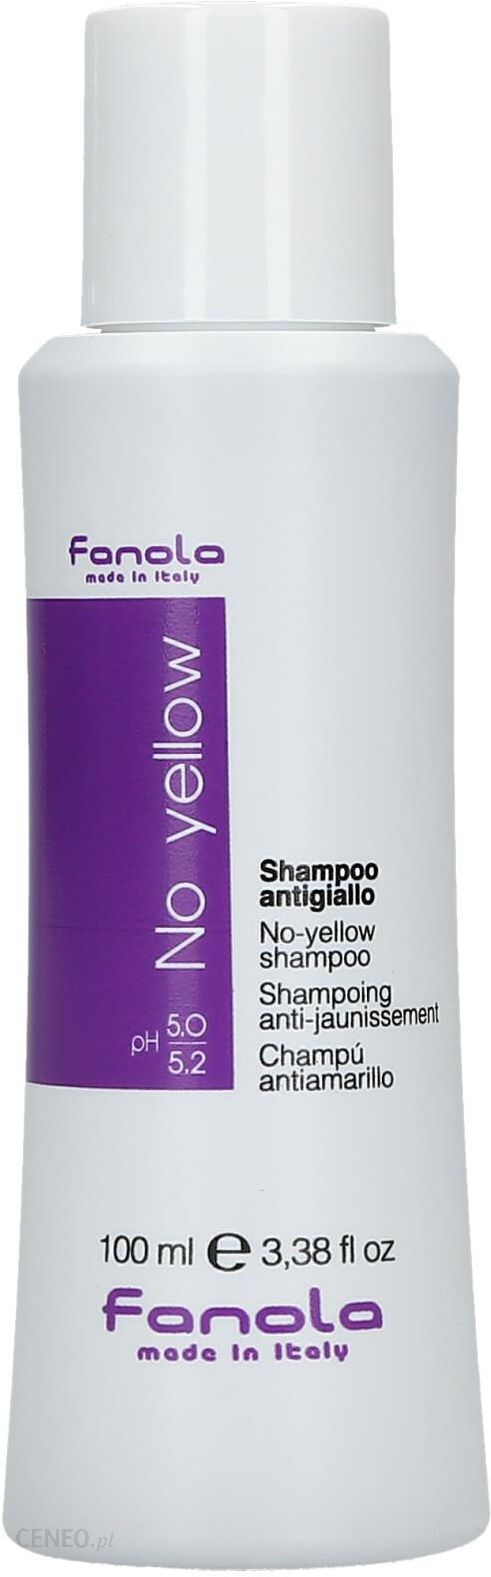 szampon no yellow bez sls